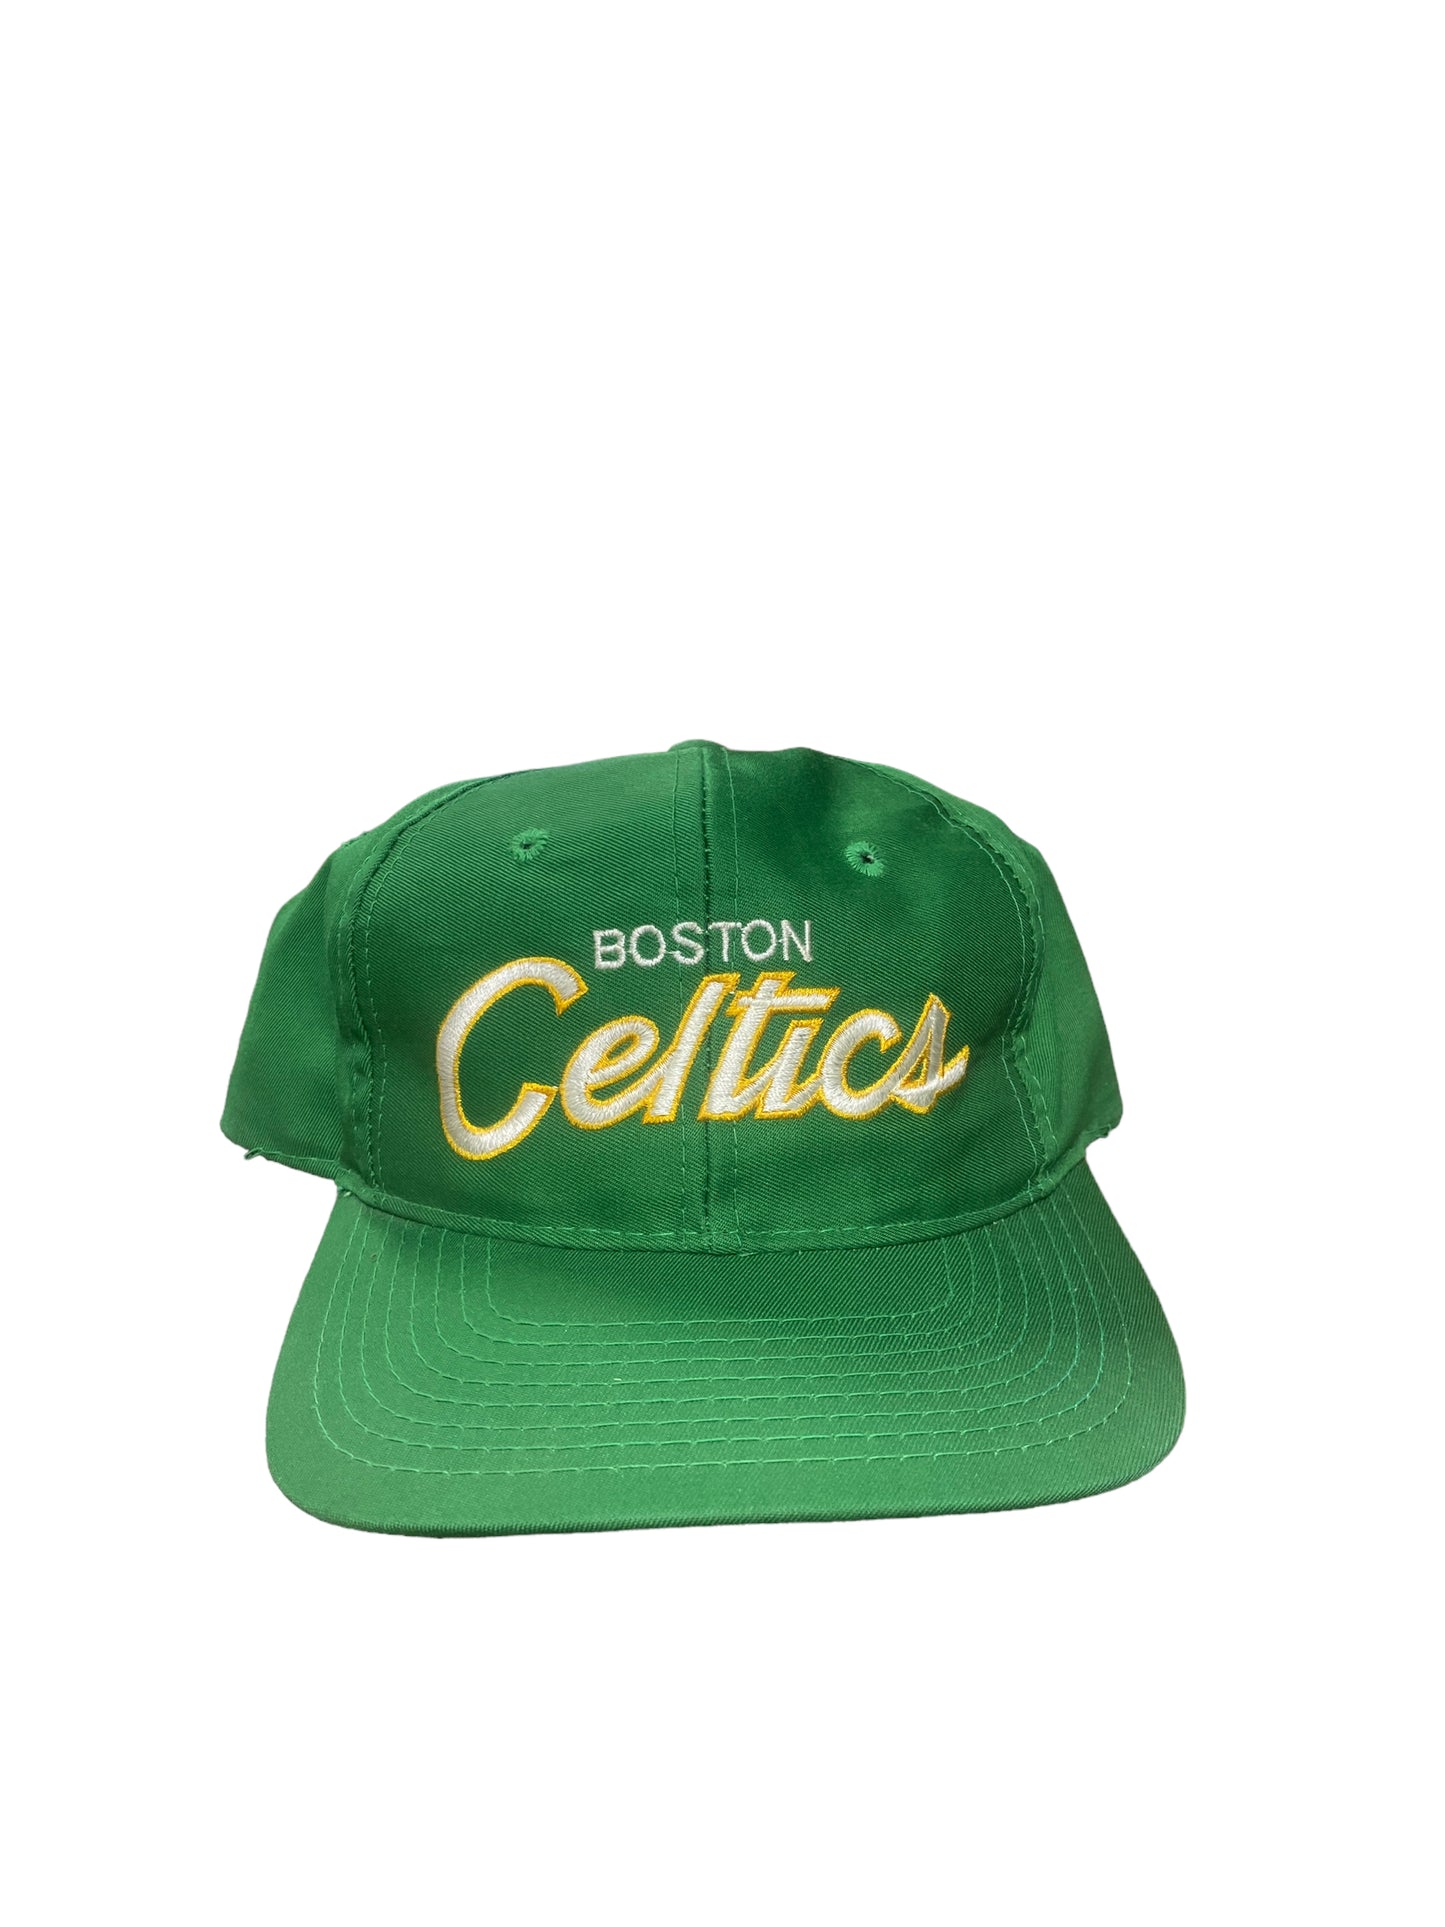 Vintage 90's Sports Specialties Boston Celtics Script Snapback Hat